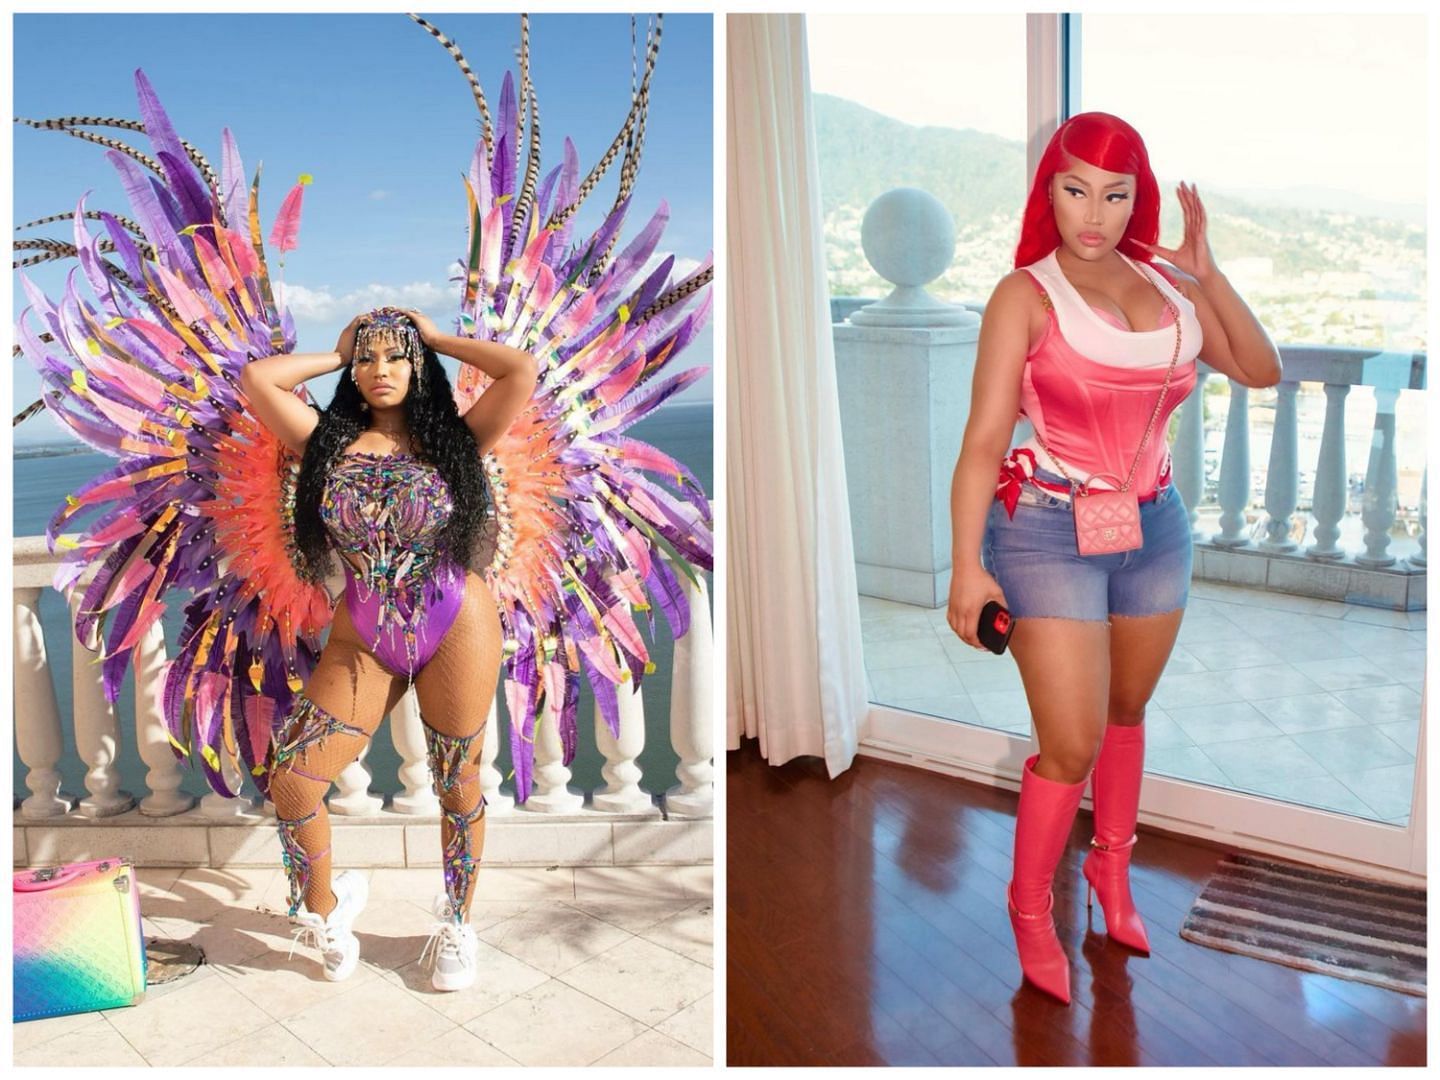 Nicki Minaj Embraces Her Body: Celebrating Her Weight Gain and Inspiring Body Positivity (Image via Instagram/Nicki Minaj)